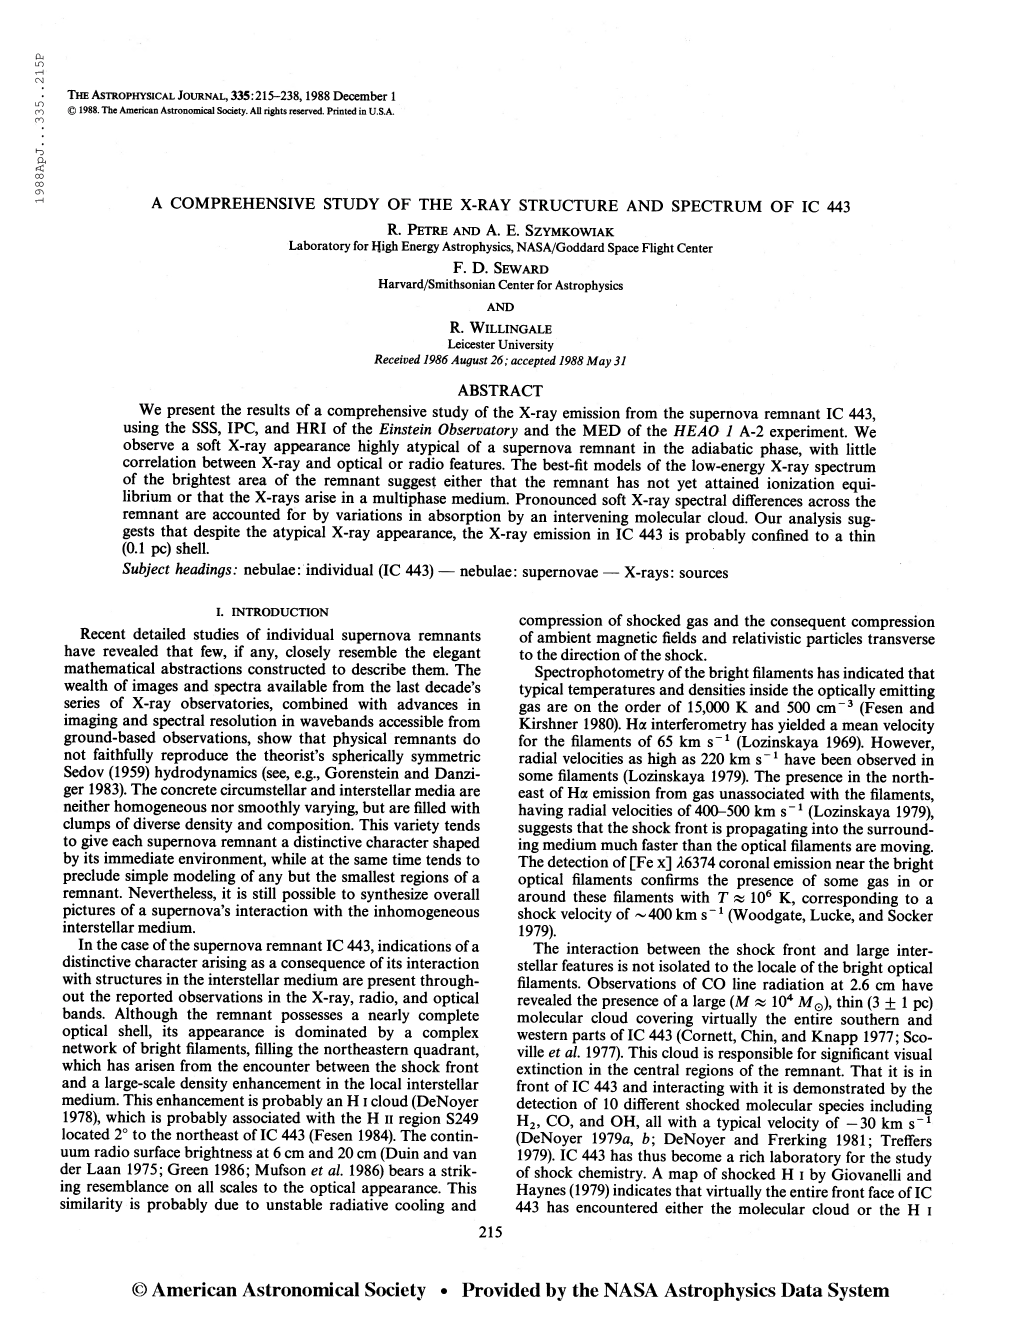 1988Apj. . .335. .215P the Astrophysical Journal, 335:215-238